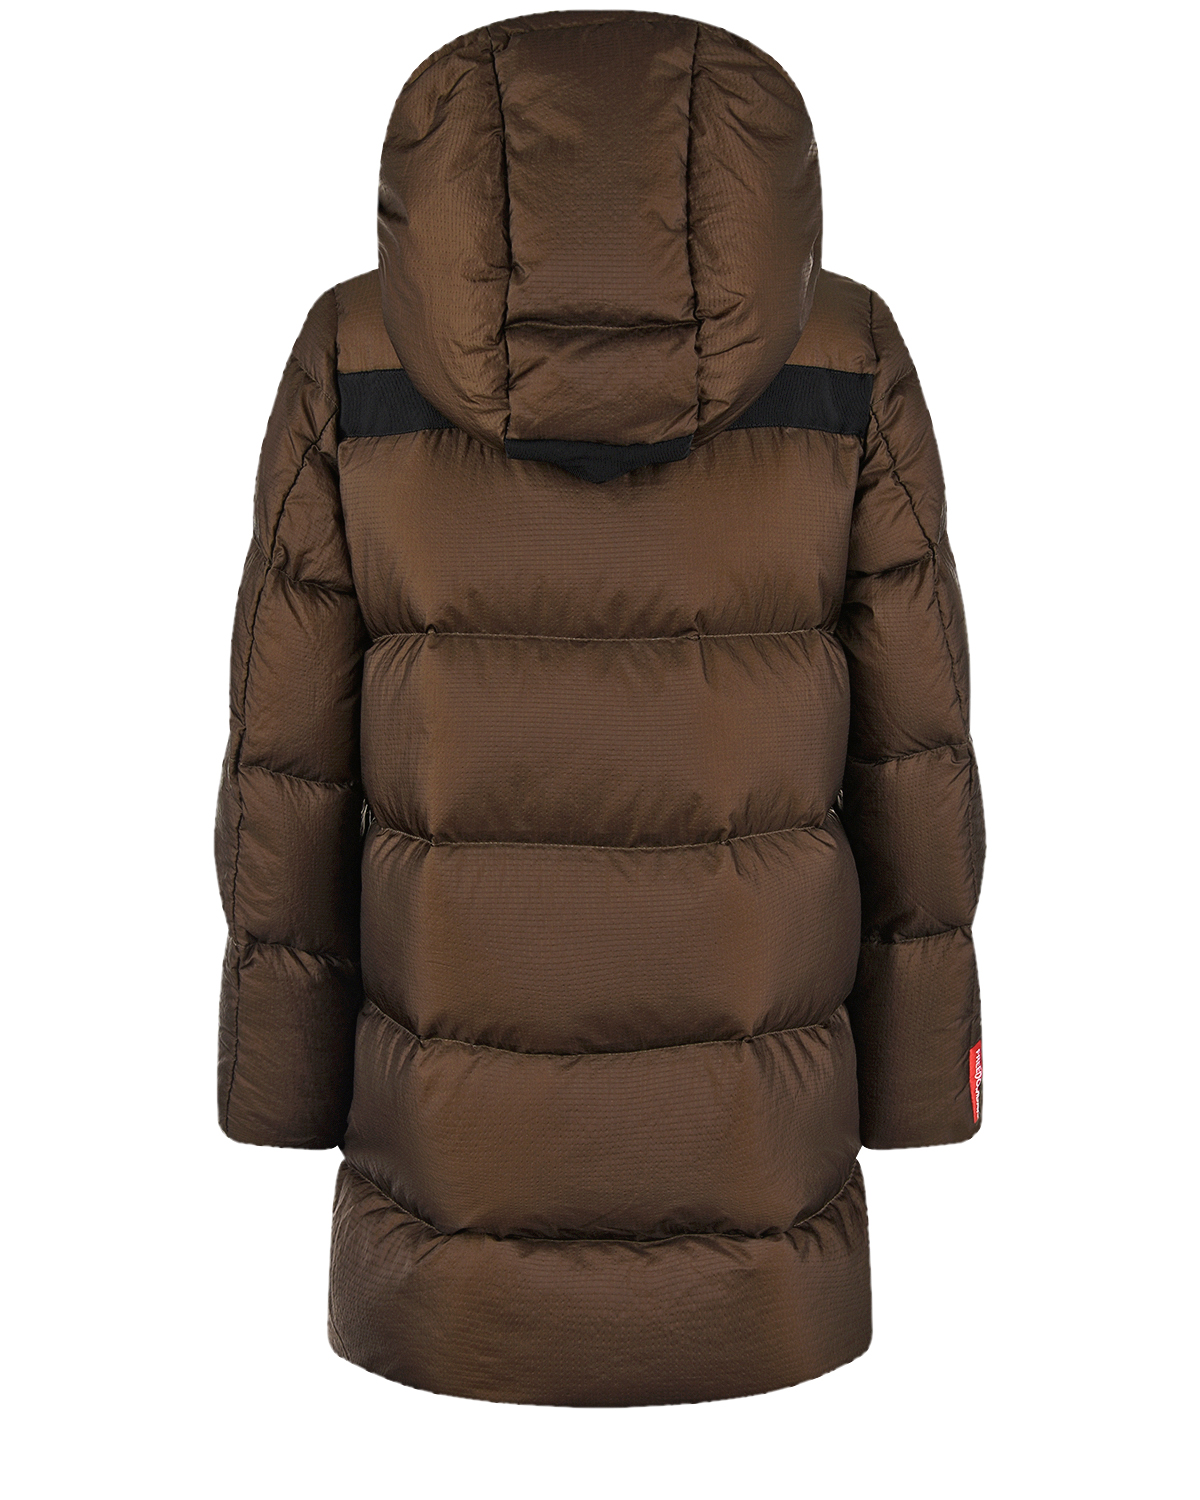 Зимняя куртка-парка цвета хаки Freedomday детская, размер 128 - фото 3